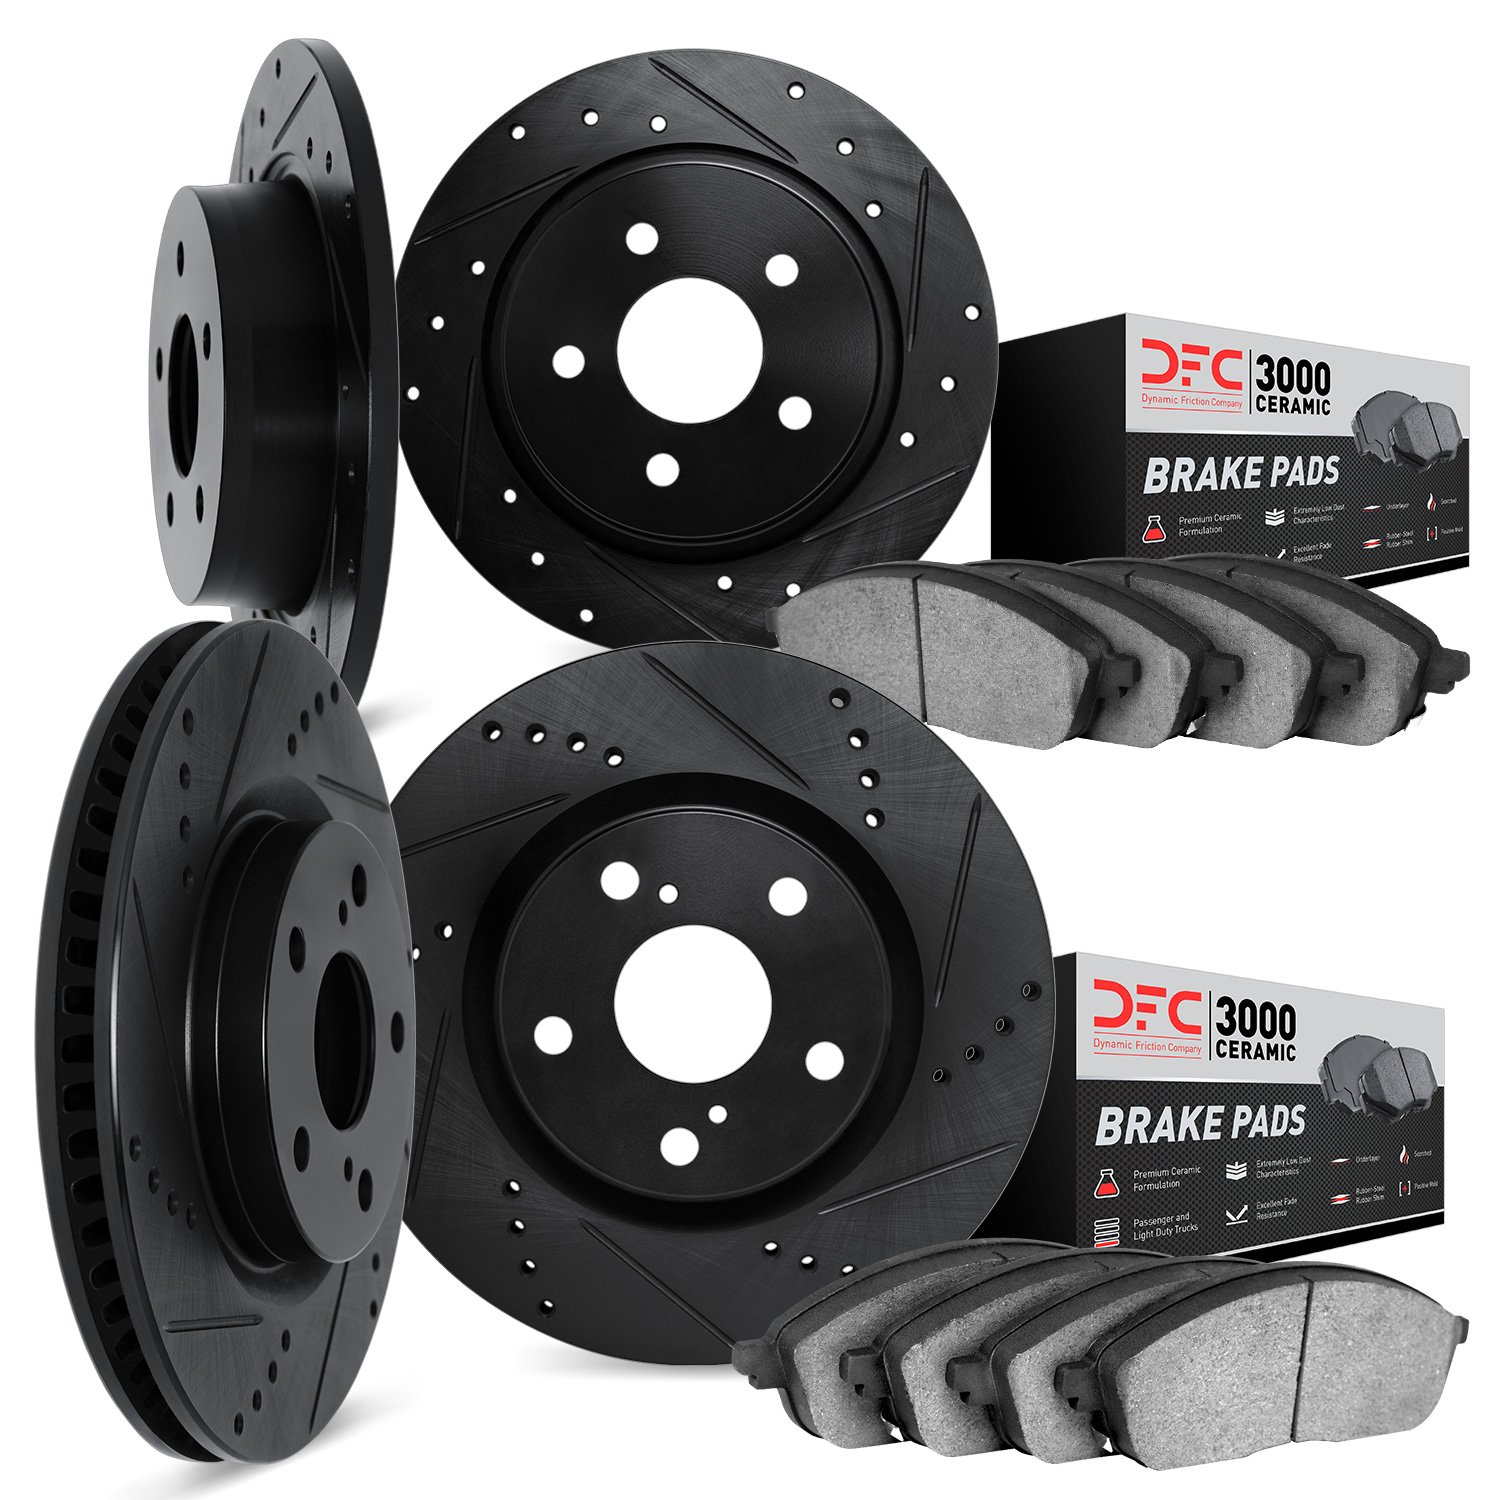 8304-55003 Drilled/Slotted Brake Rotors with 3000-Series Ceramic Brake Pads Kit [Black], 2015-2020 Ford/Lincoln/Mercury/Mazda, P